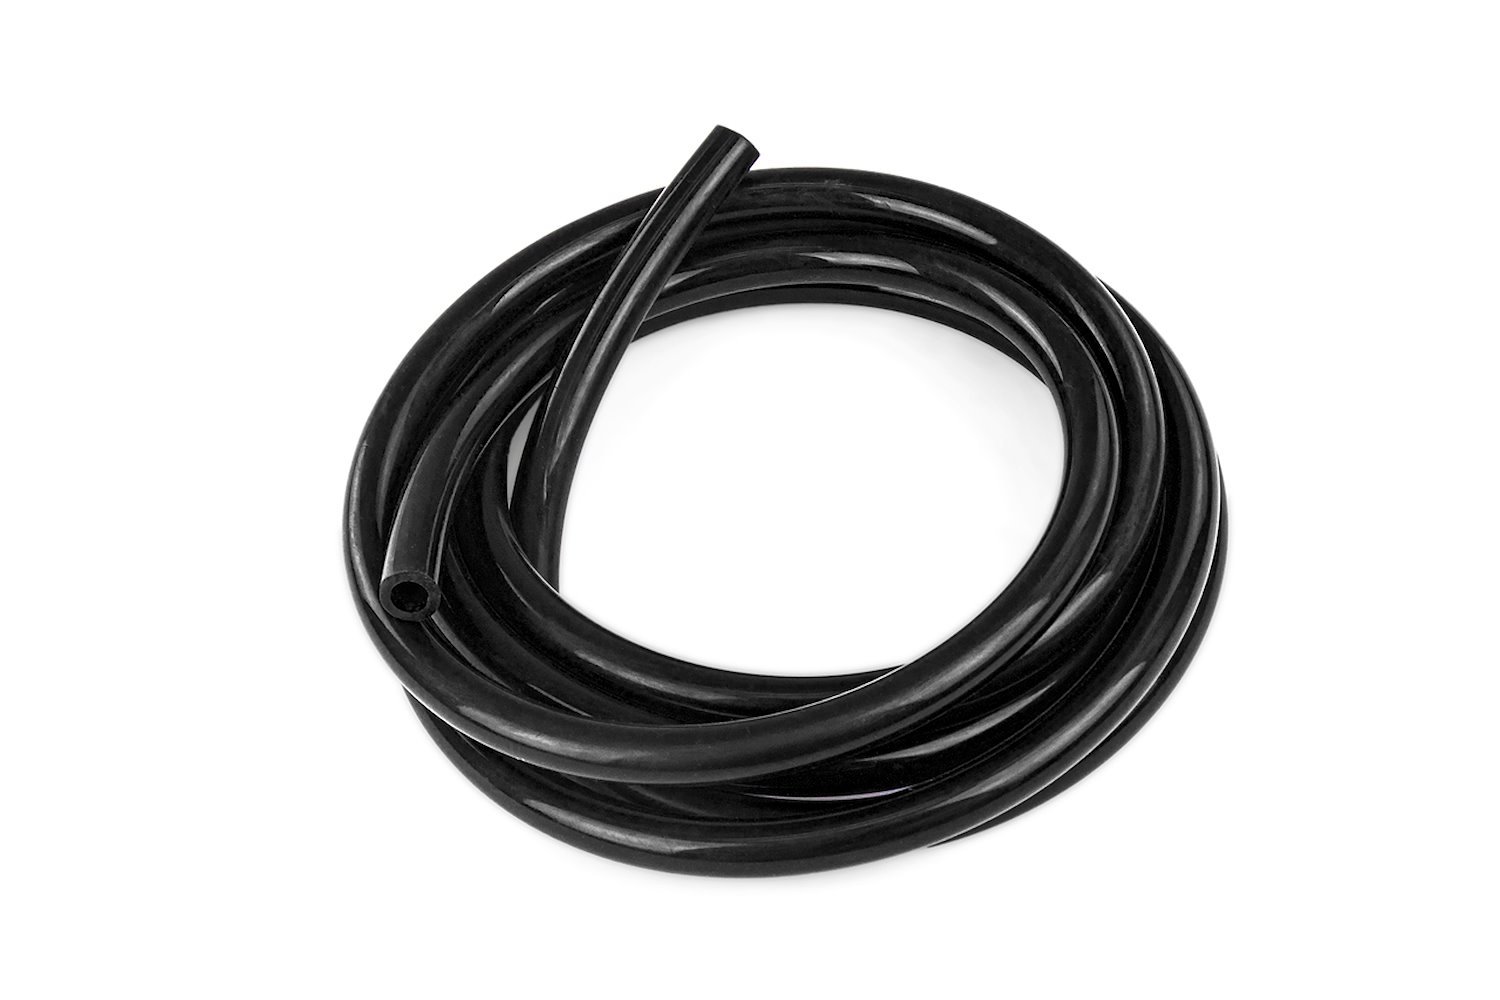 HTSVH2-BLKx5 High-Temperature Silicone Vacuum Hose Tubing, 5/64 in. ID, 5 ft. Roll, Black